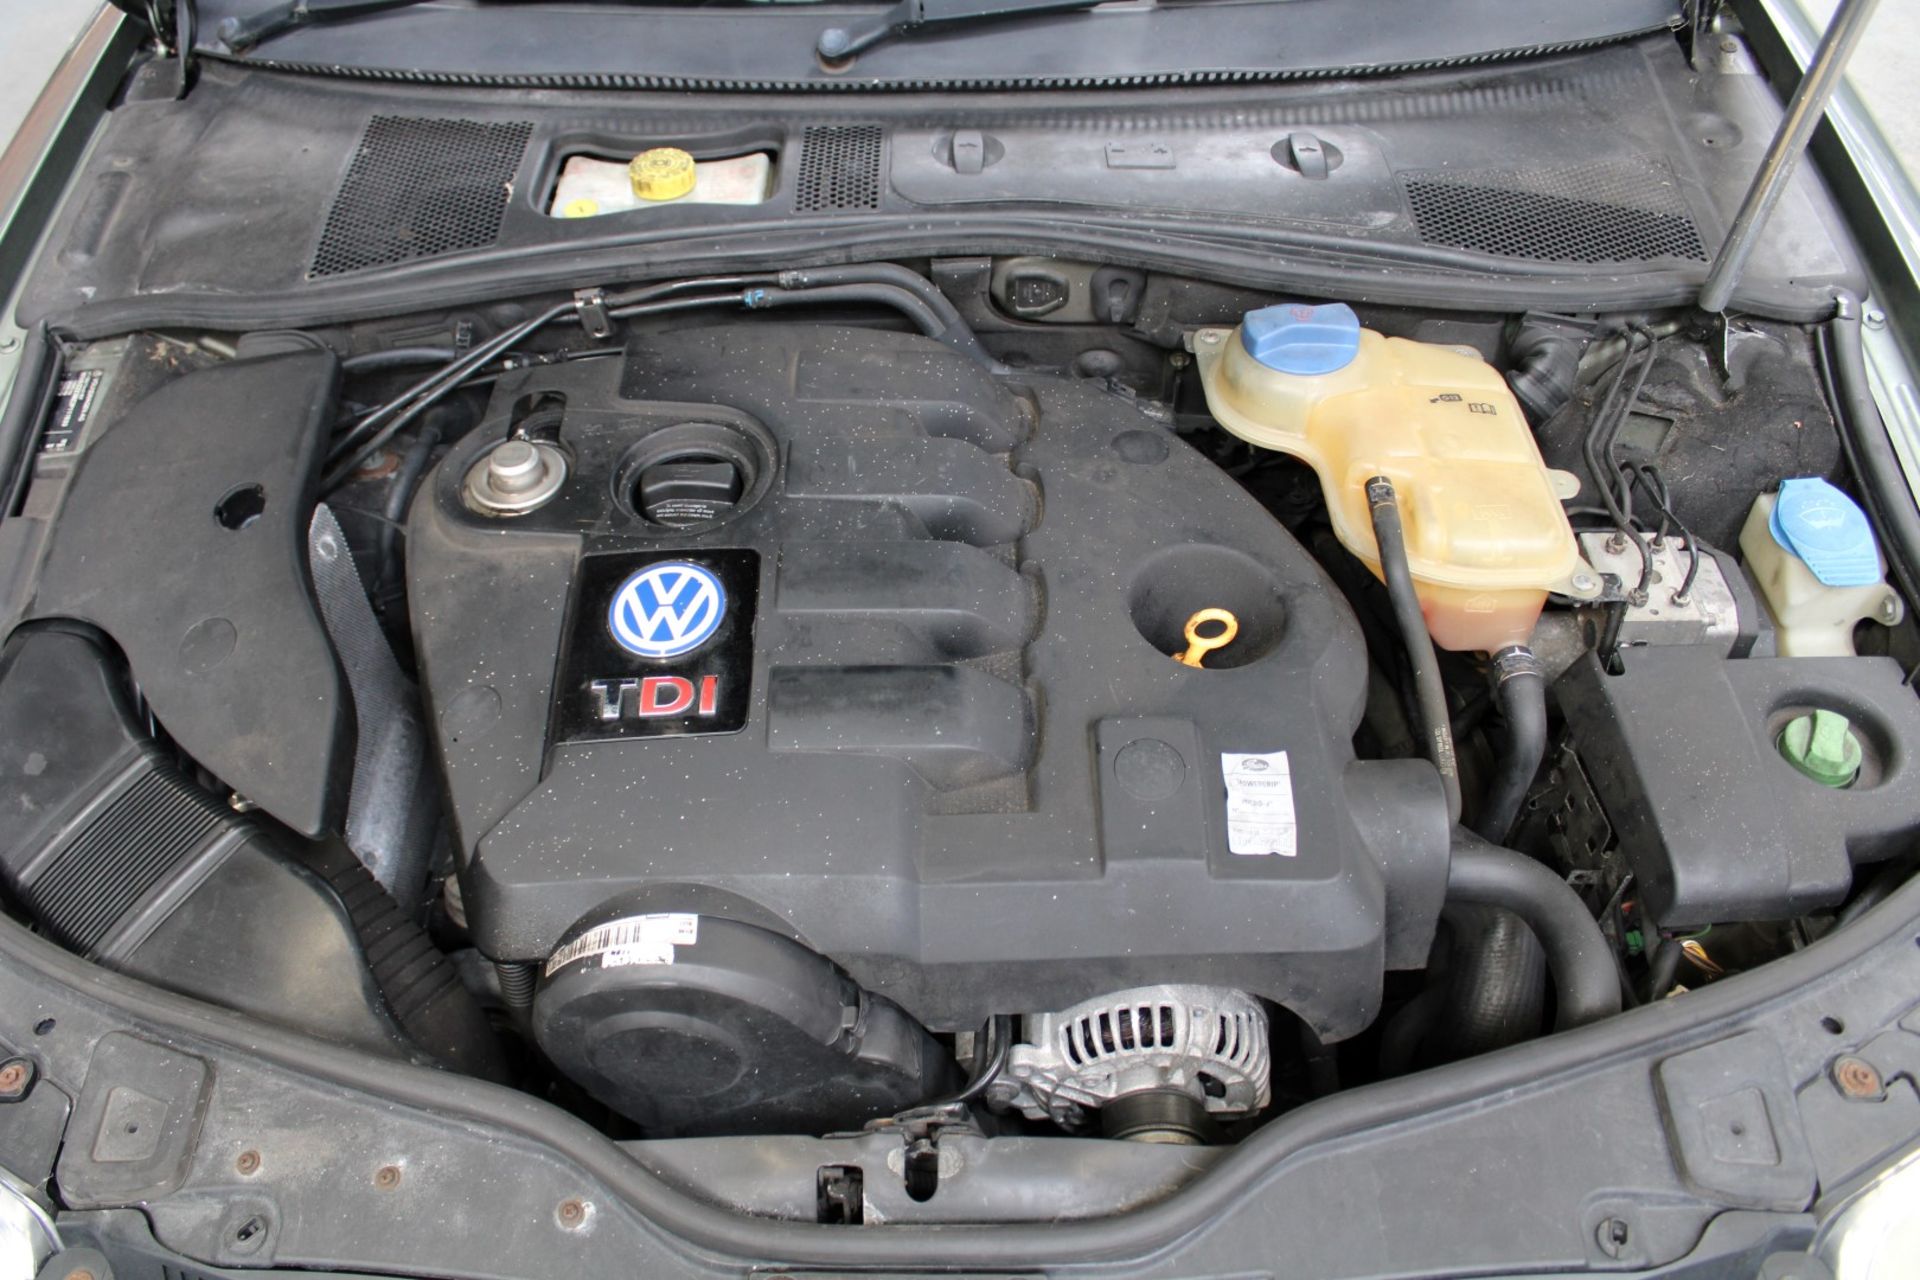 51 01 VW Passat Sport TDI - Image 8 of 35